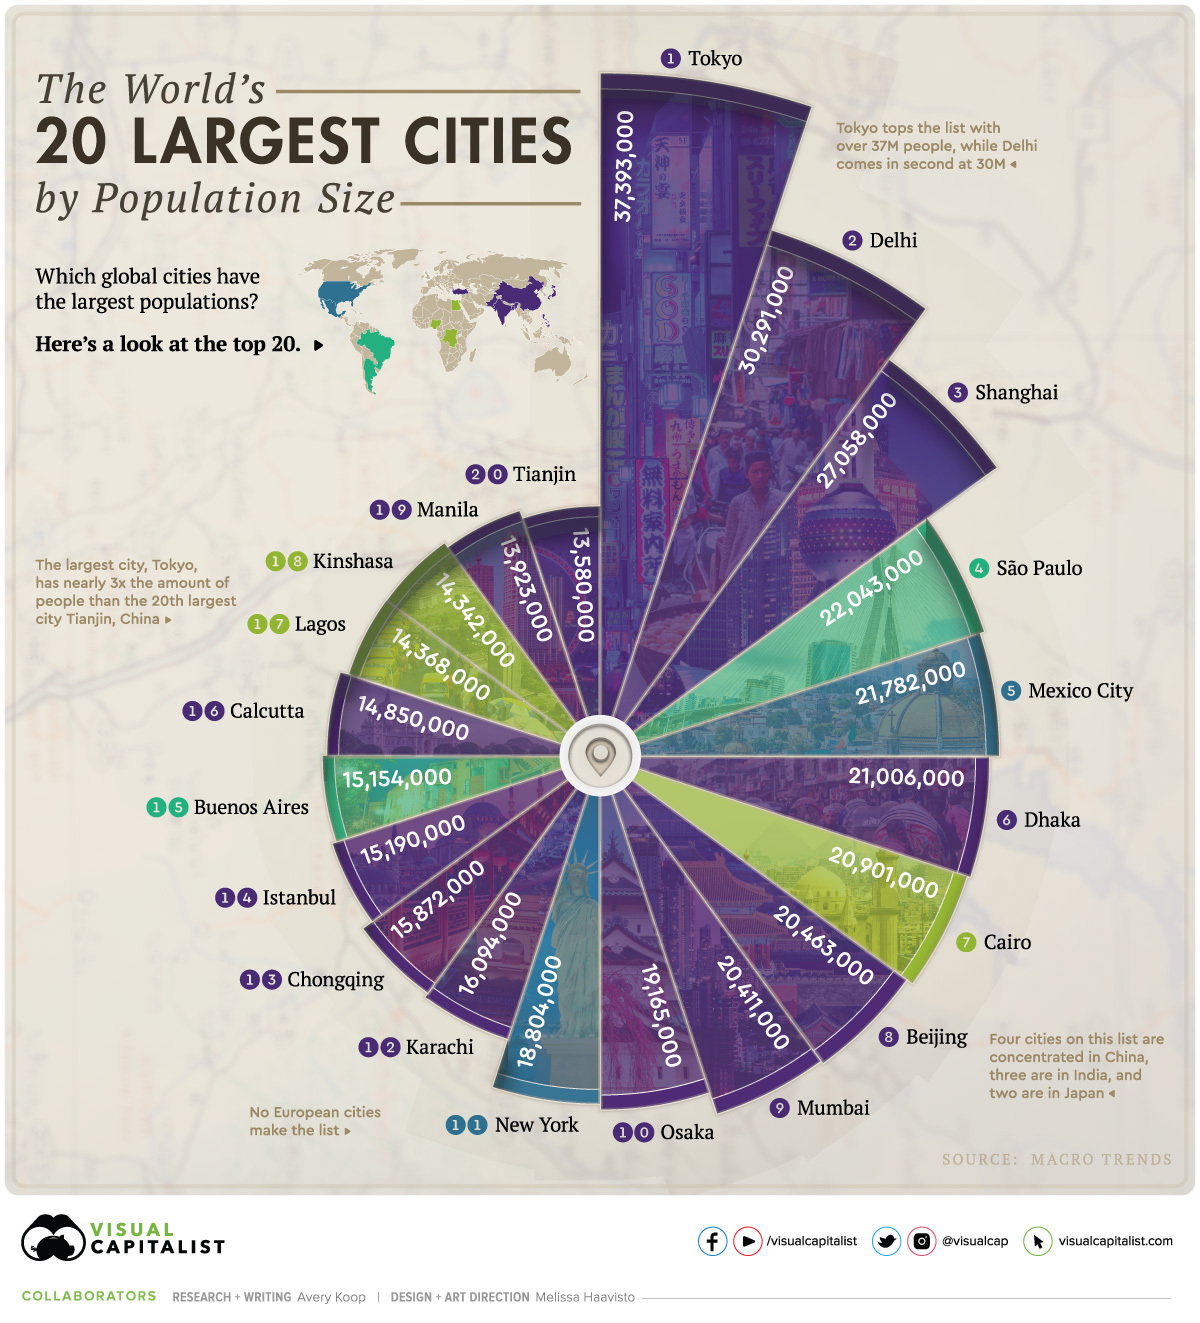 global city rankings gawc